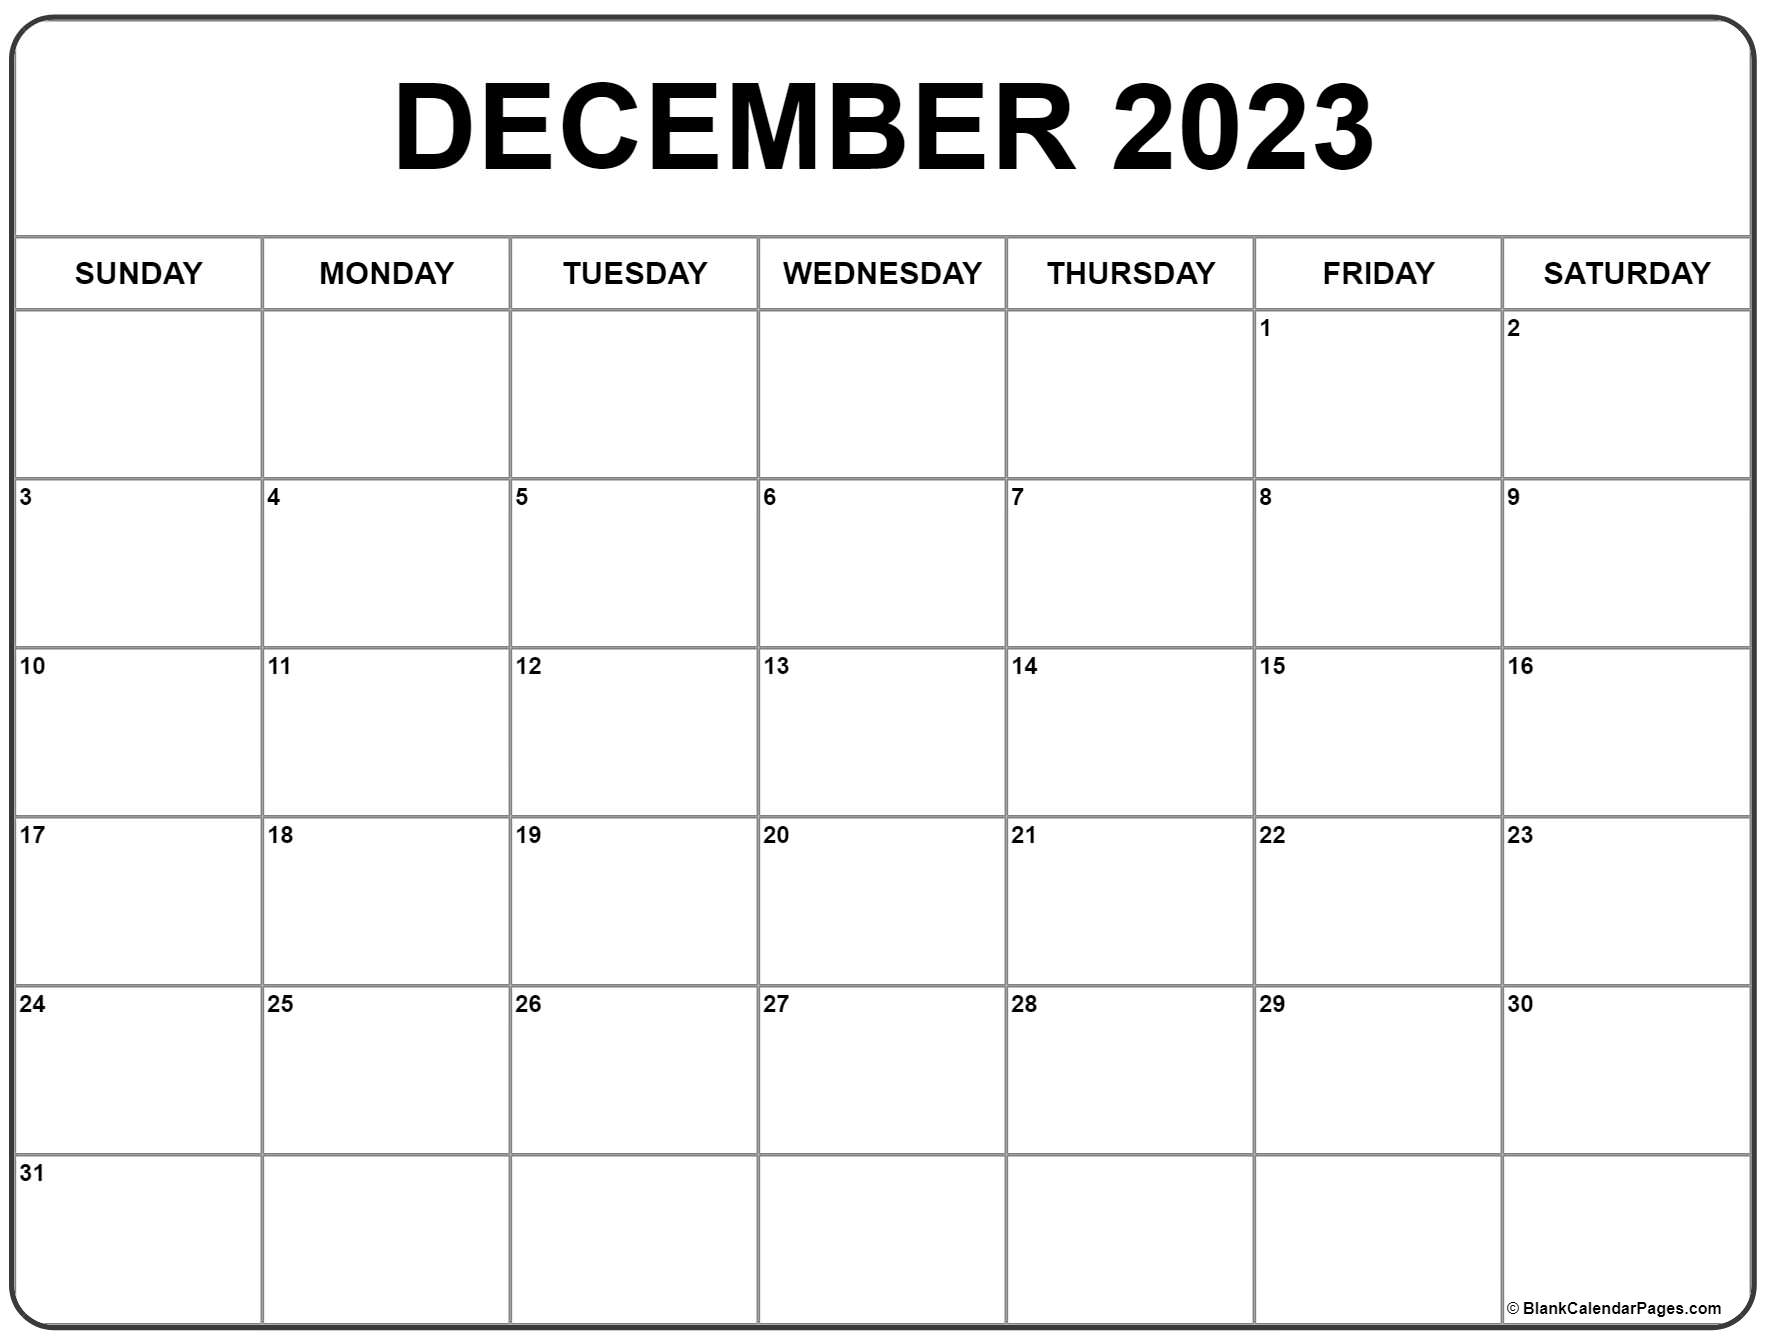 december-2023-calendar-to-print-free-get-latest-map-update